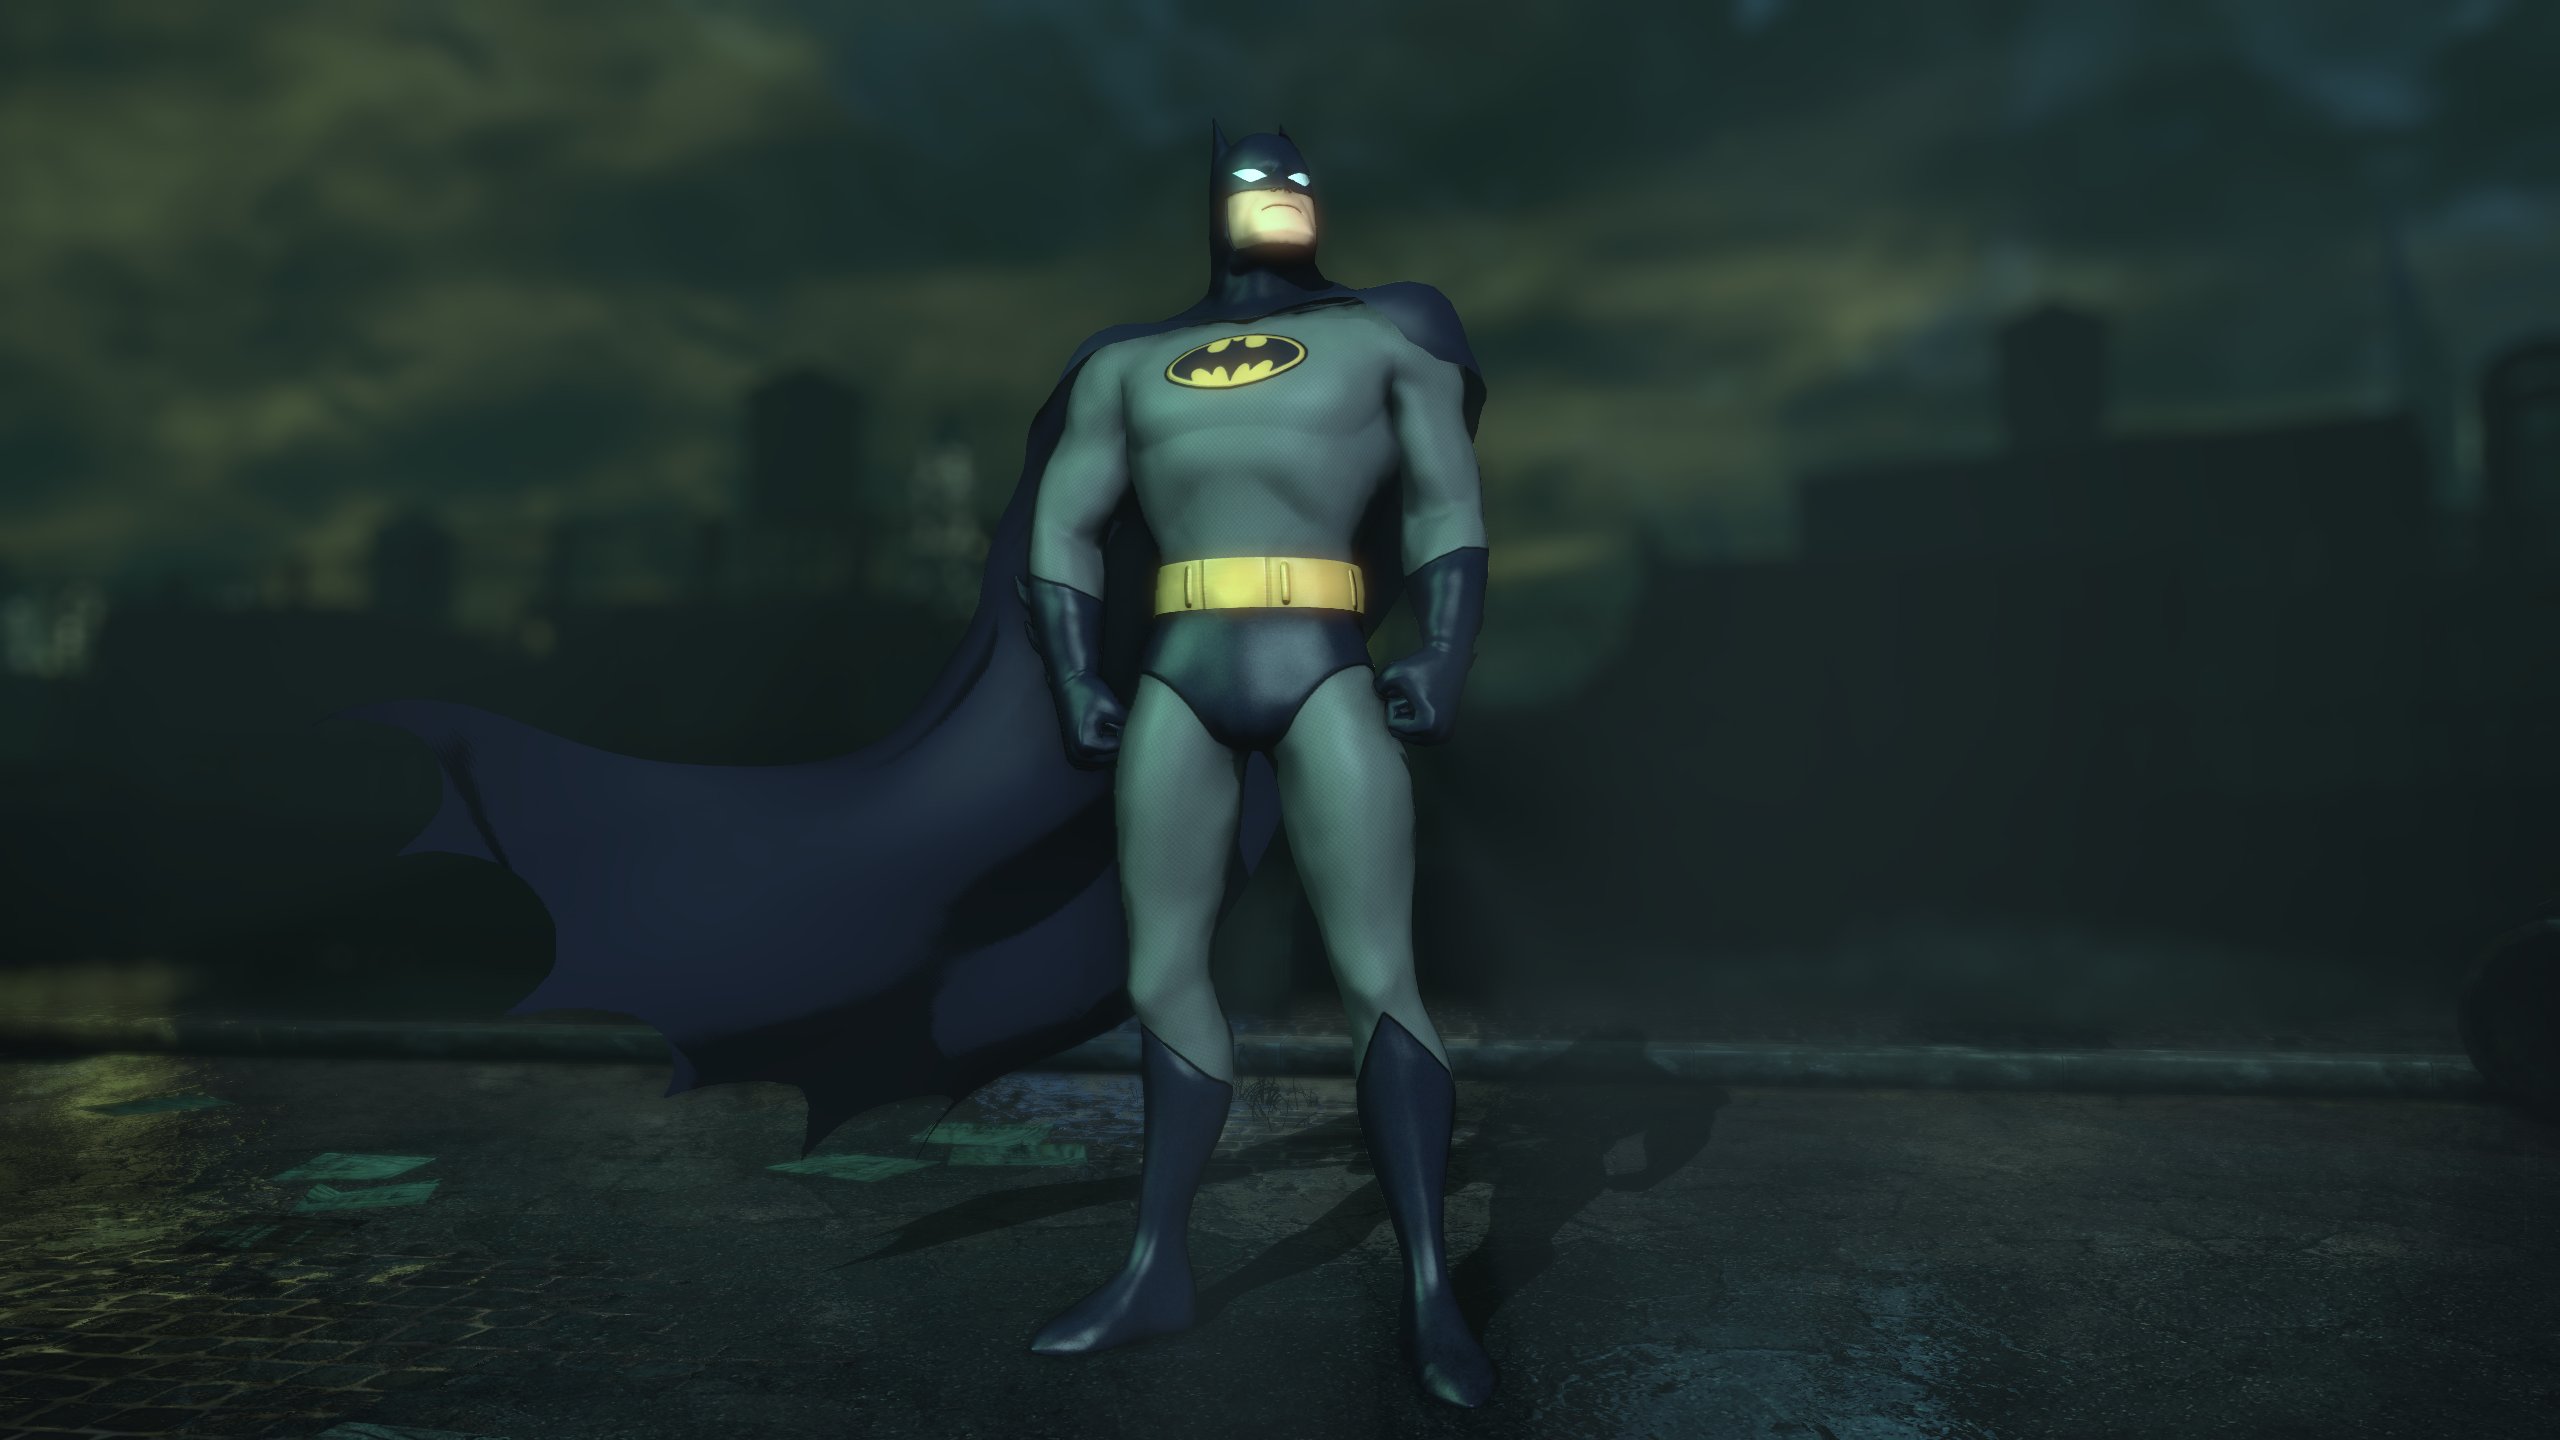 Character trophies - Batman: Arkham City